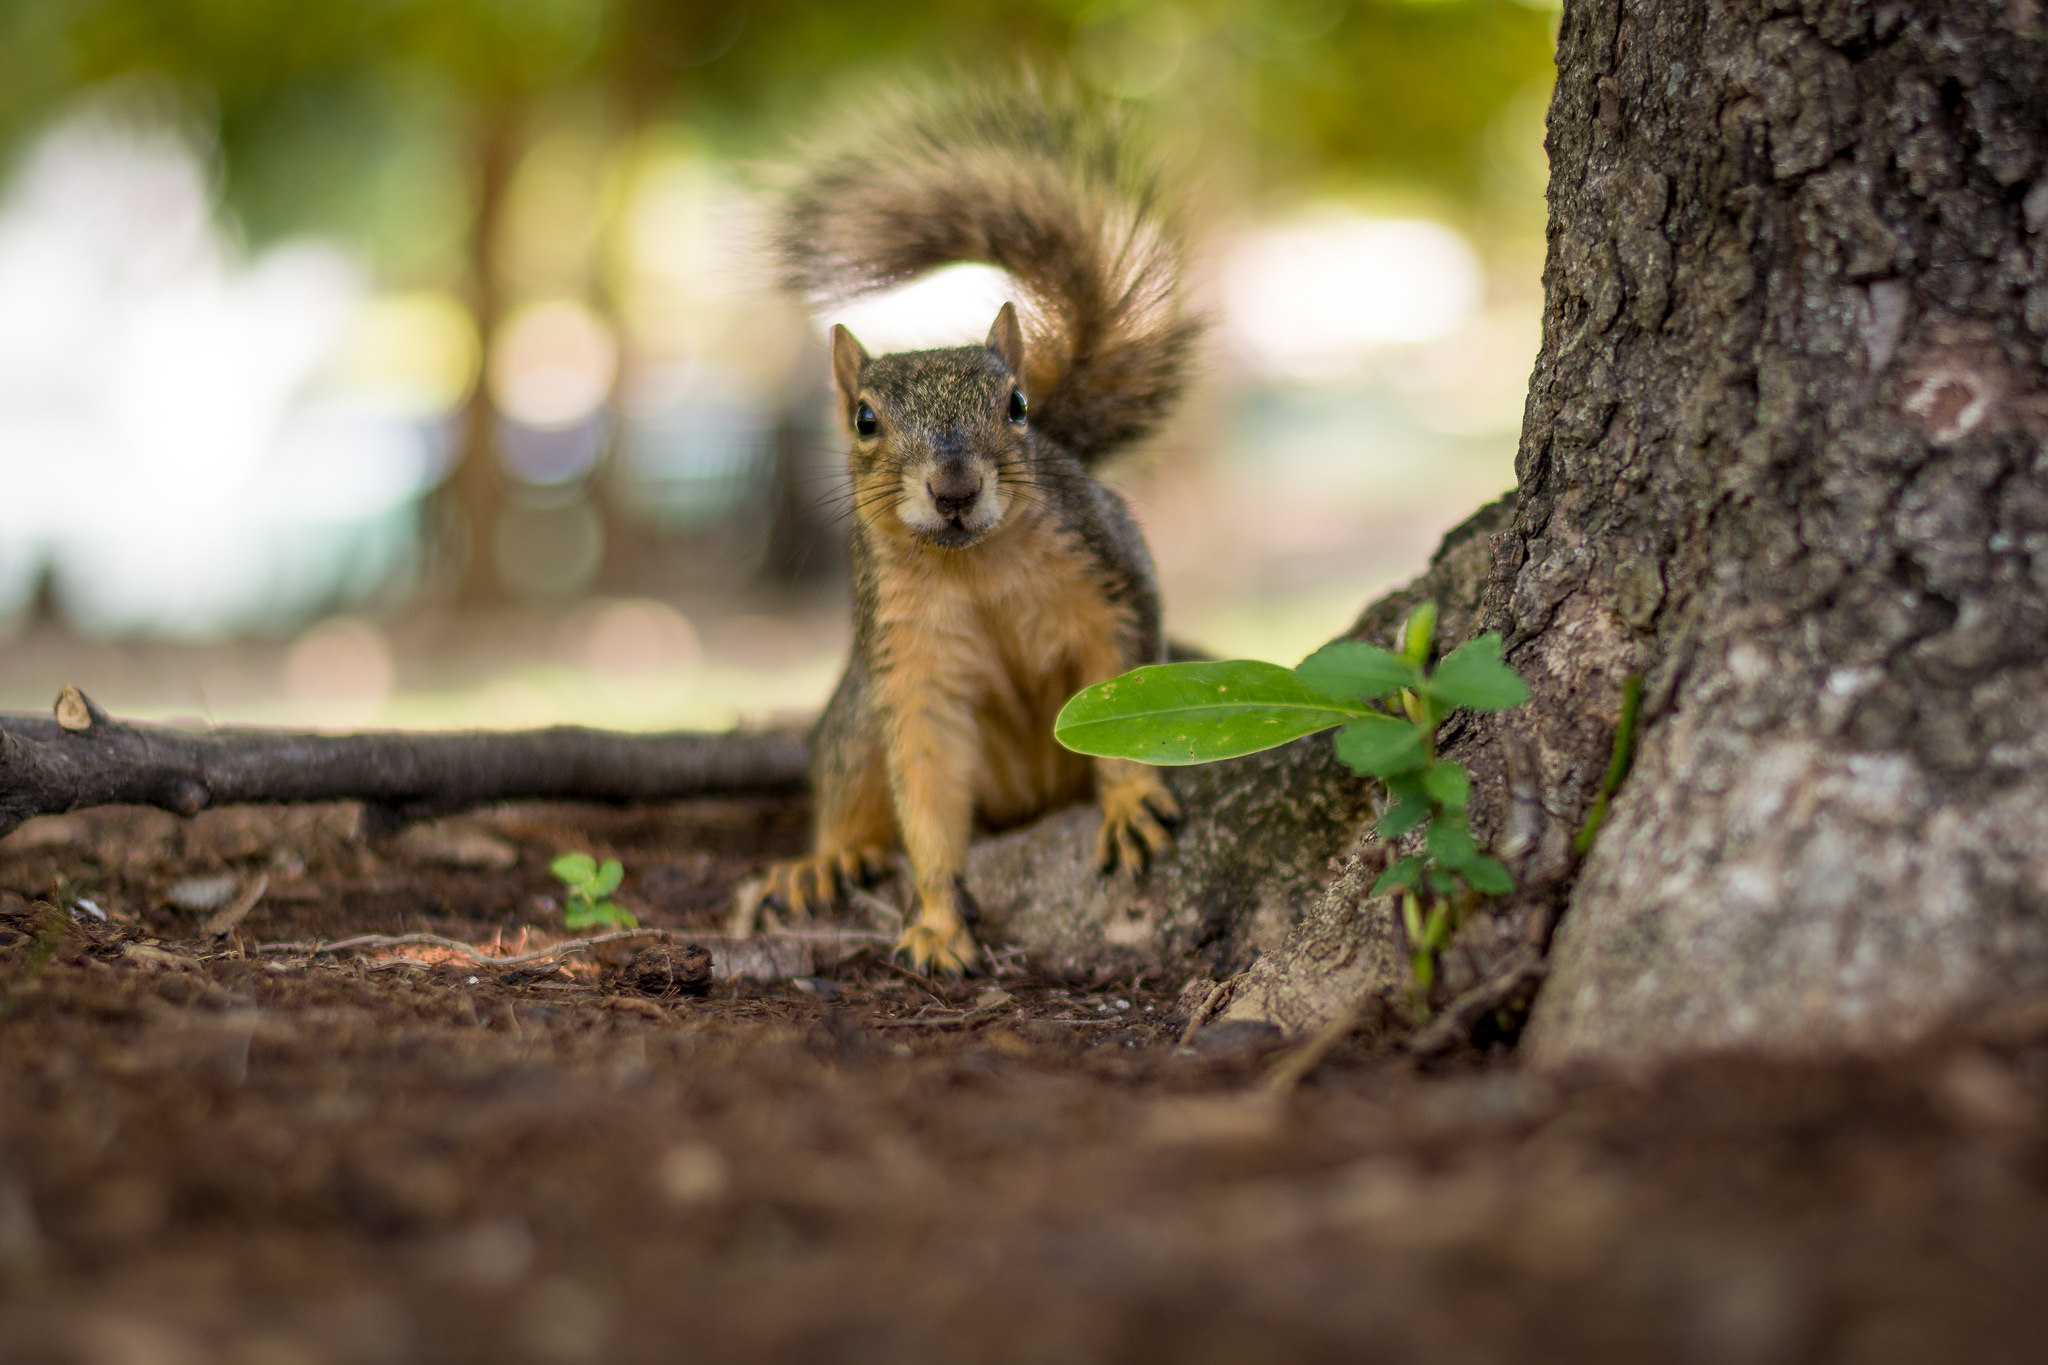 http://digital-photography-school.com/wp-content/uploads/2016/09/tips-for-sharp-photos-squirrel.jpg